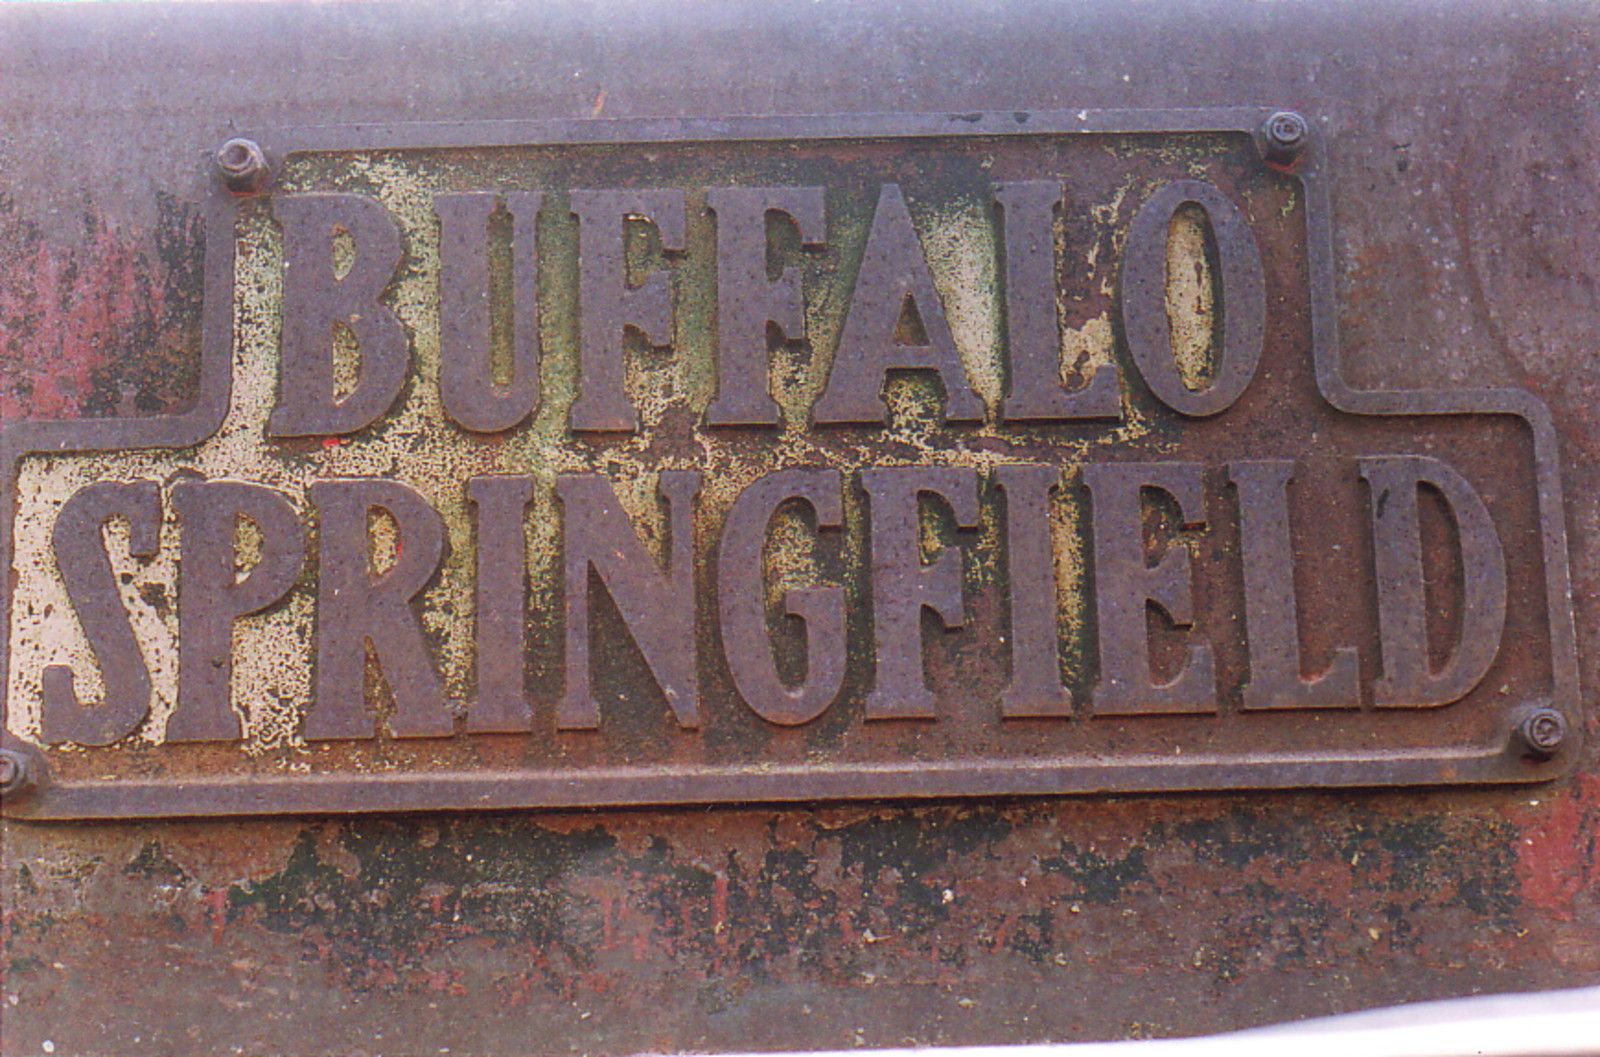 A sign saying 'Buffalo Springfield'